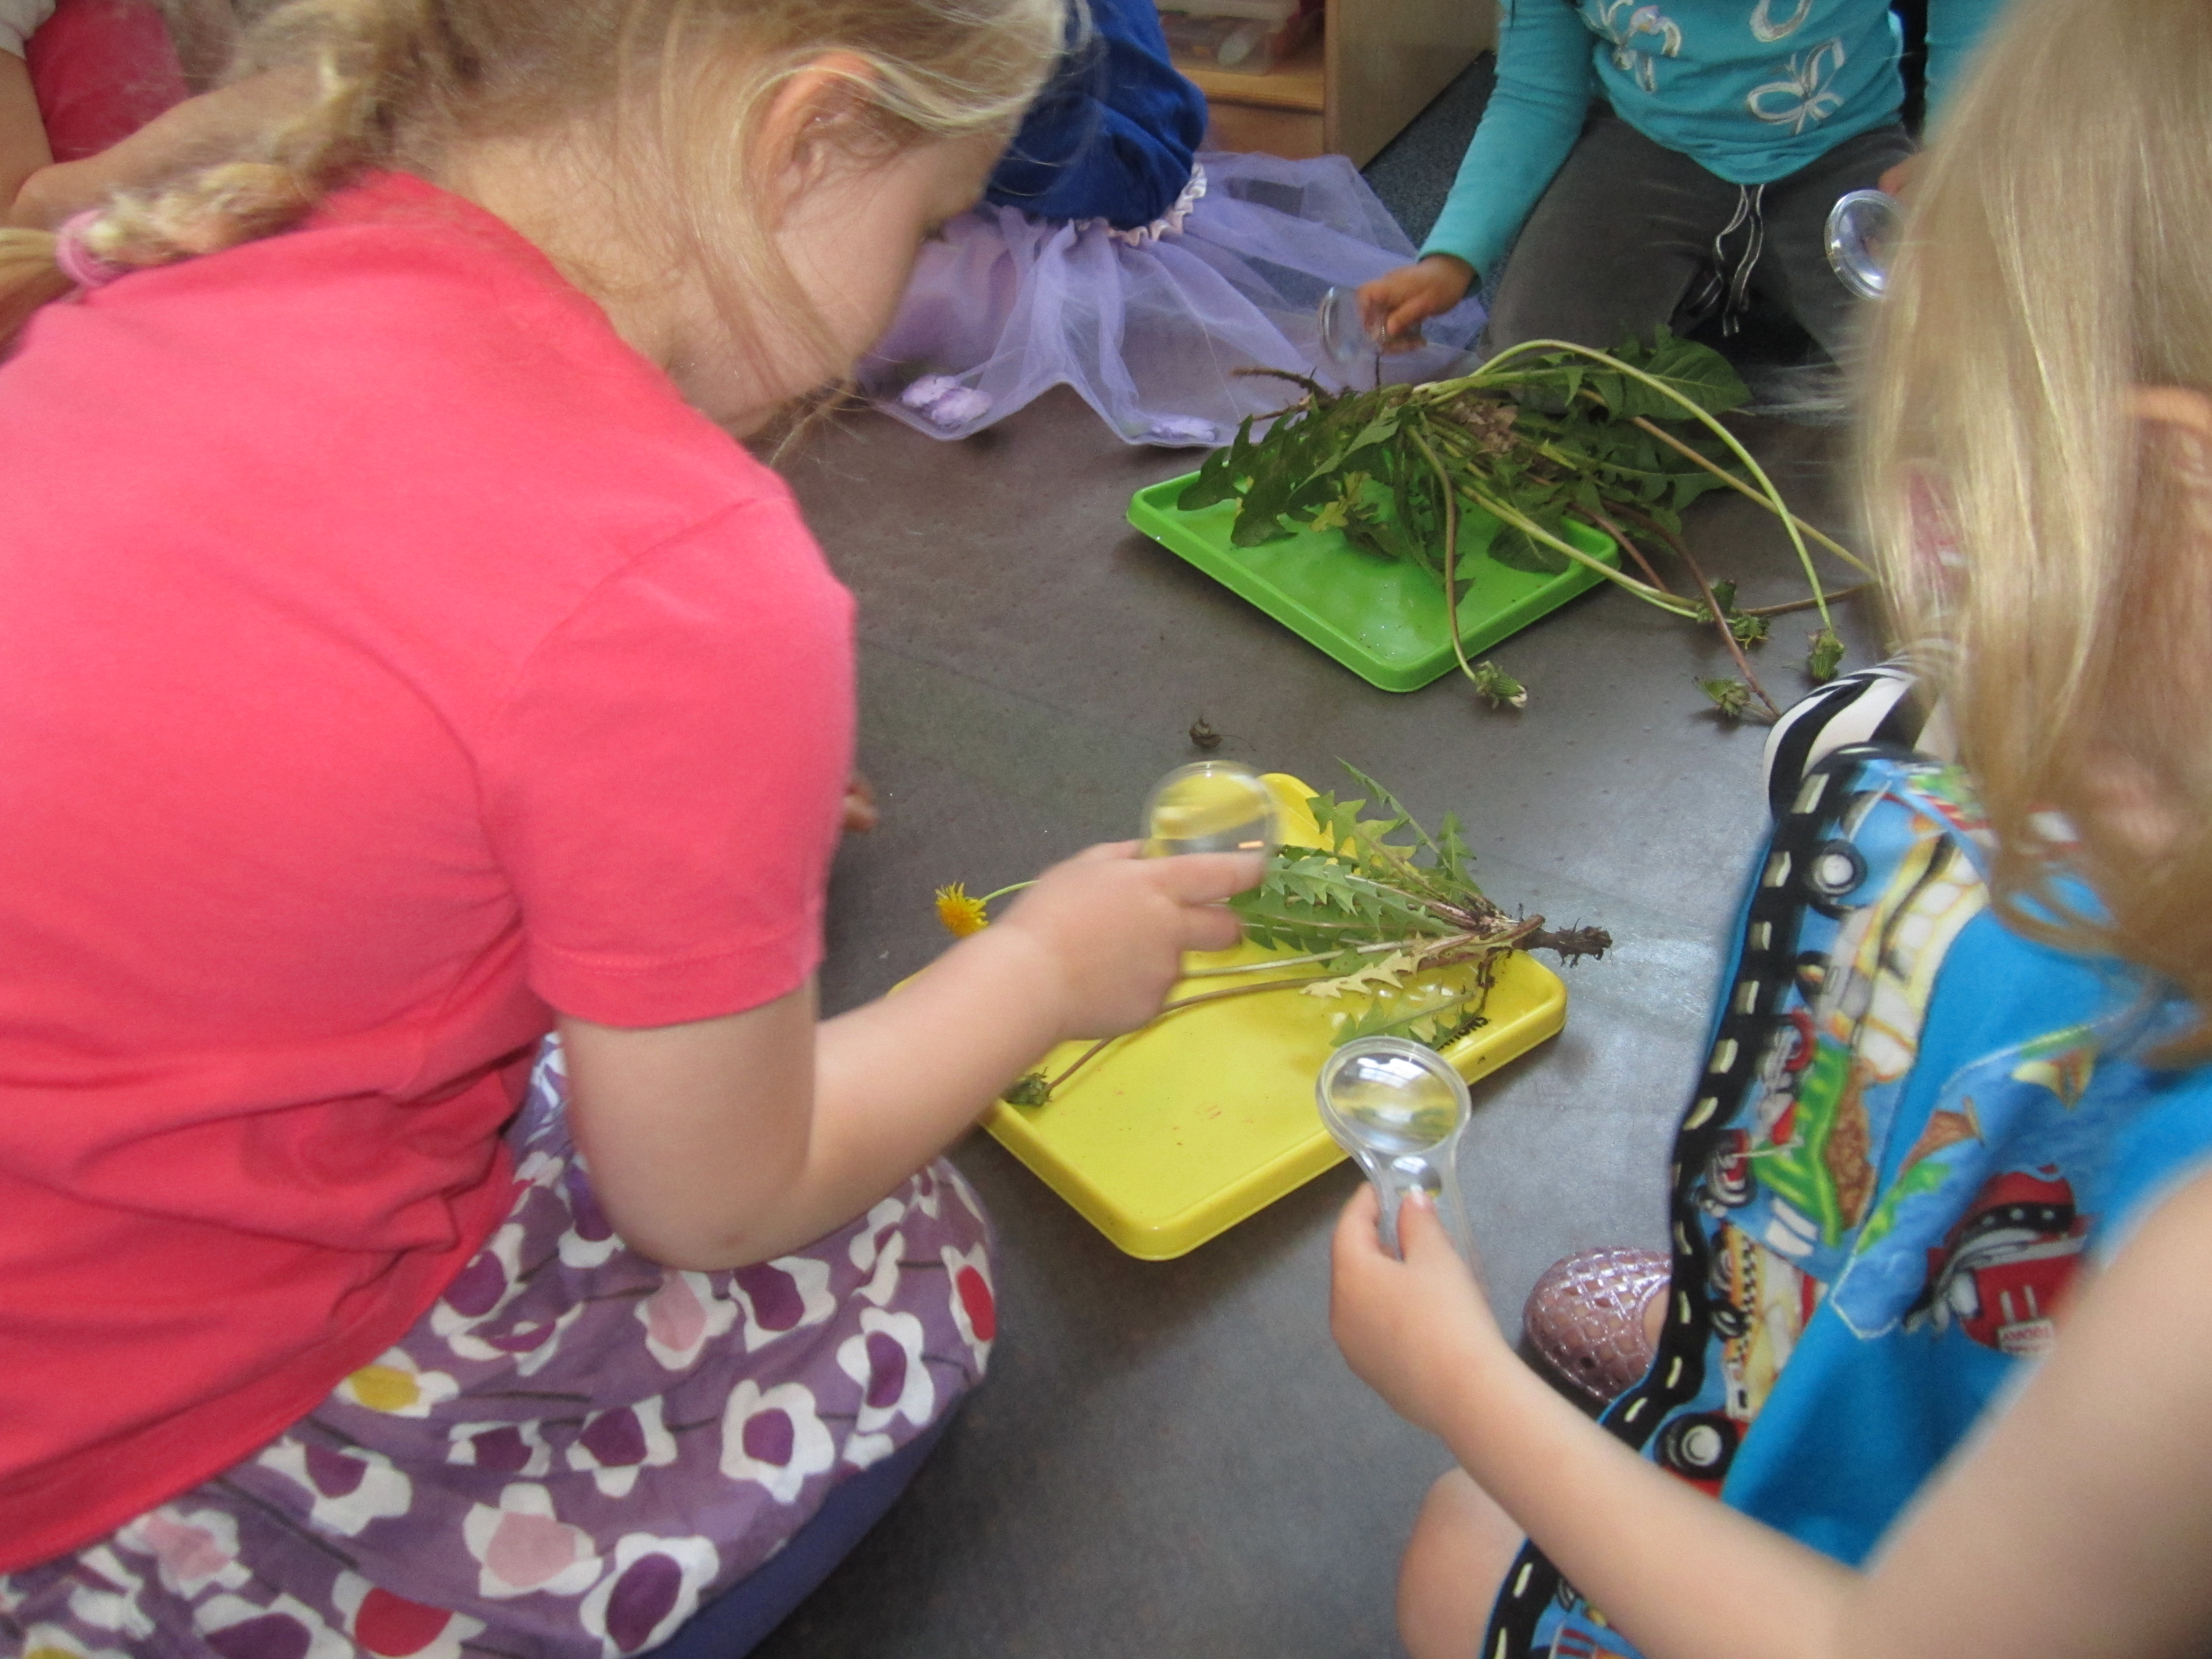 Children use magnifiers to examine dandelion plants.